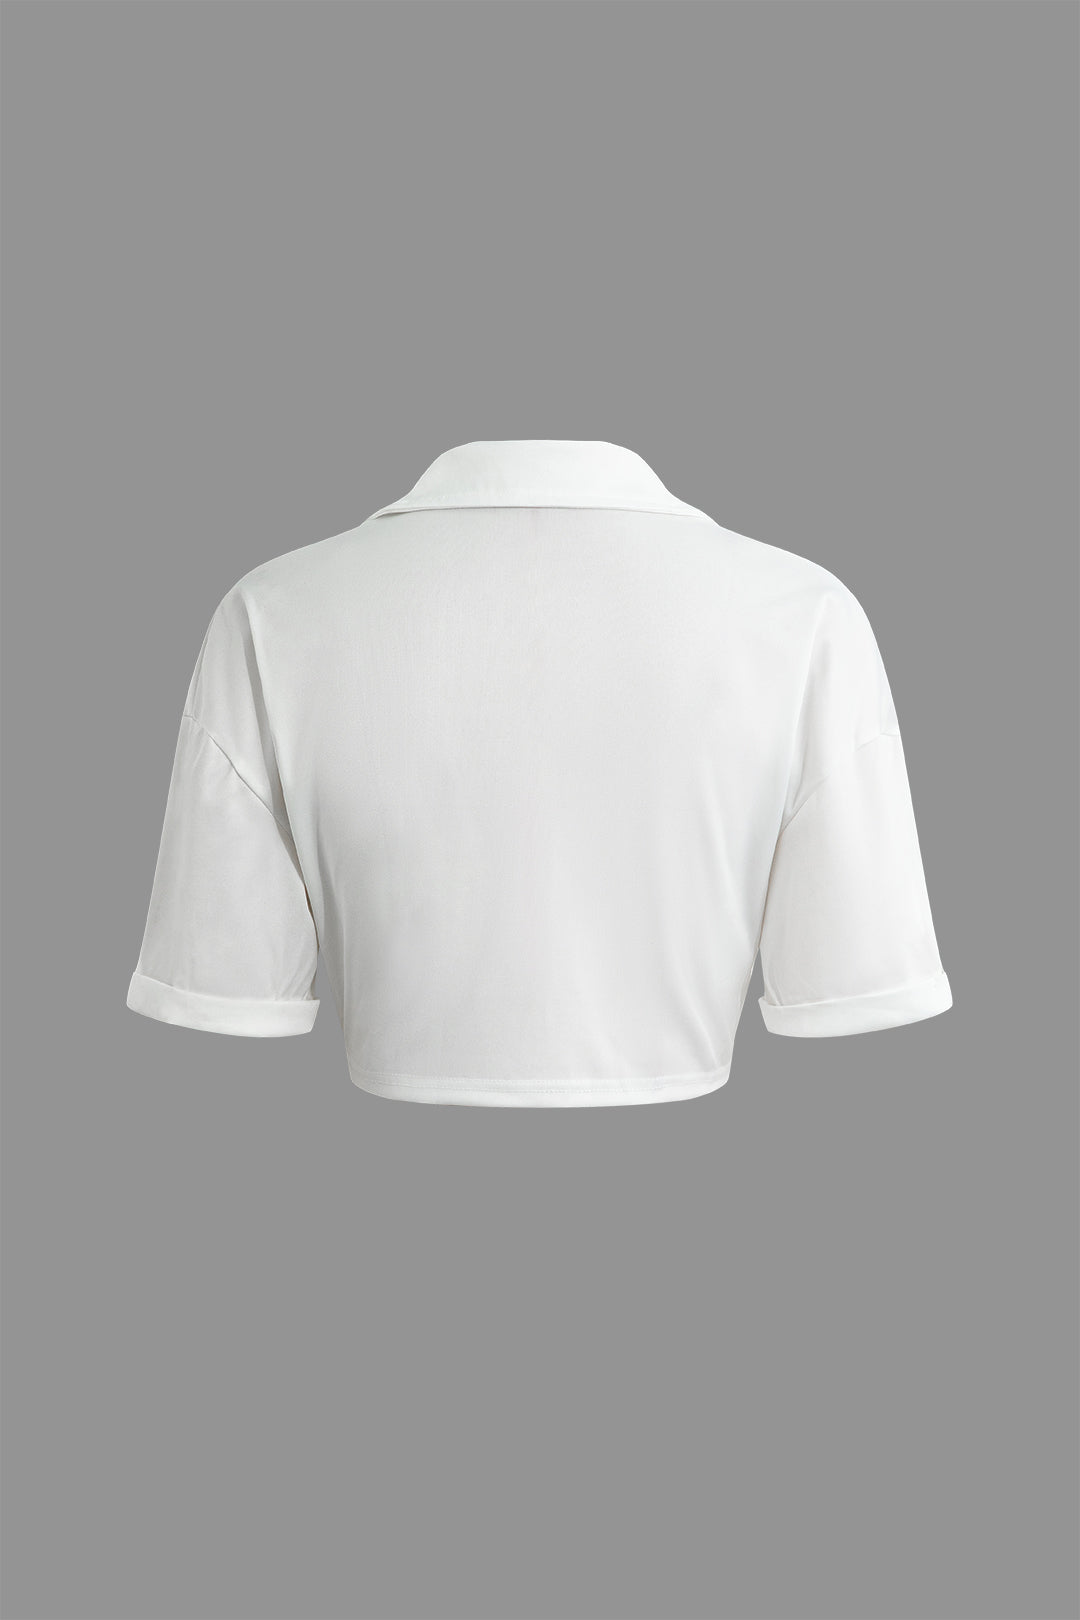 Flap Pocket V-neck Crop Shirt And Shorts Set